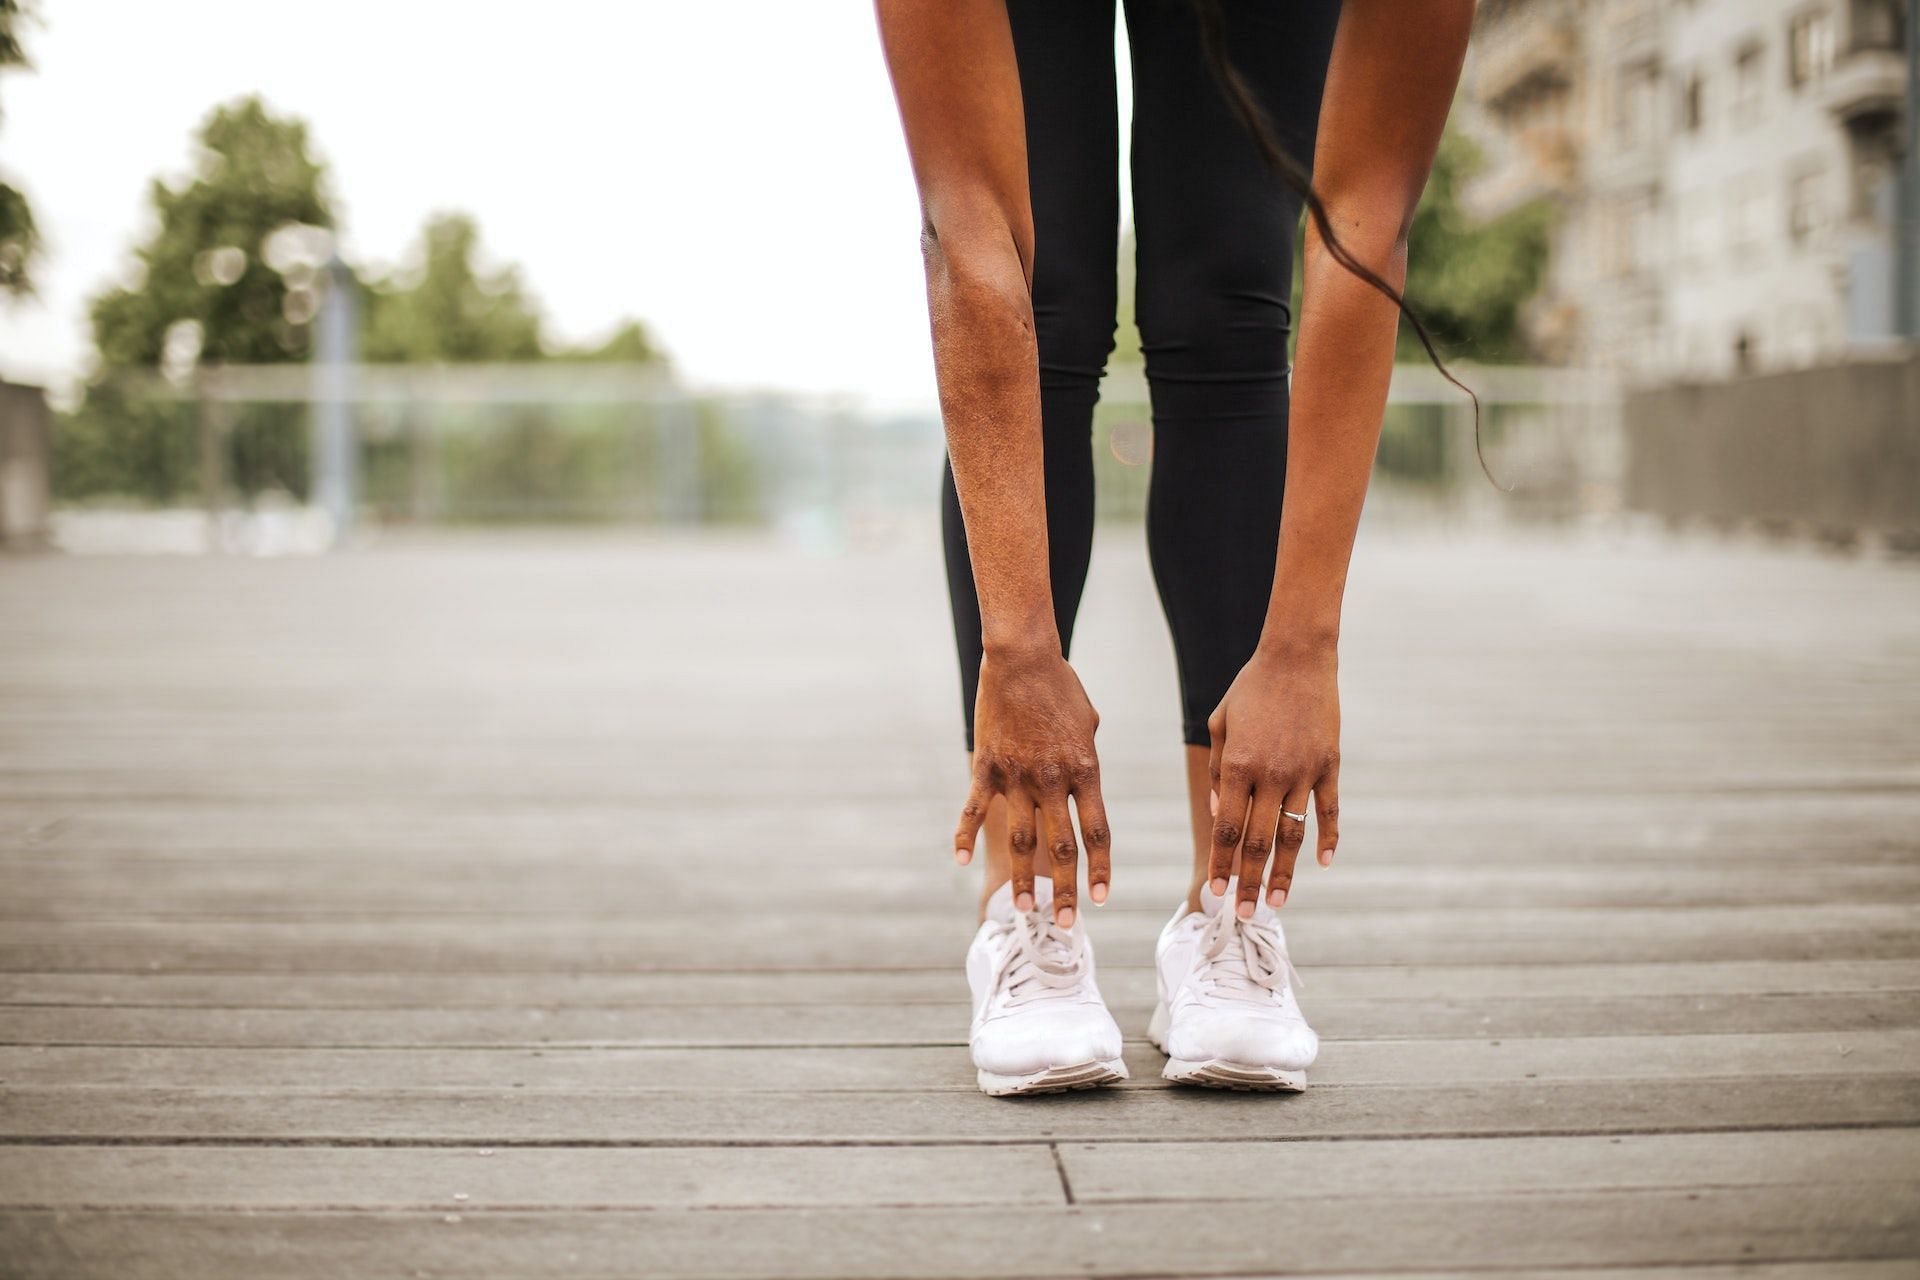 Hamstring stretches are good for knee pain. (Photo via Pexels/Andrea Piacquadio)